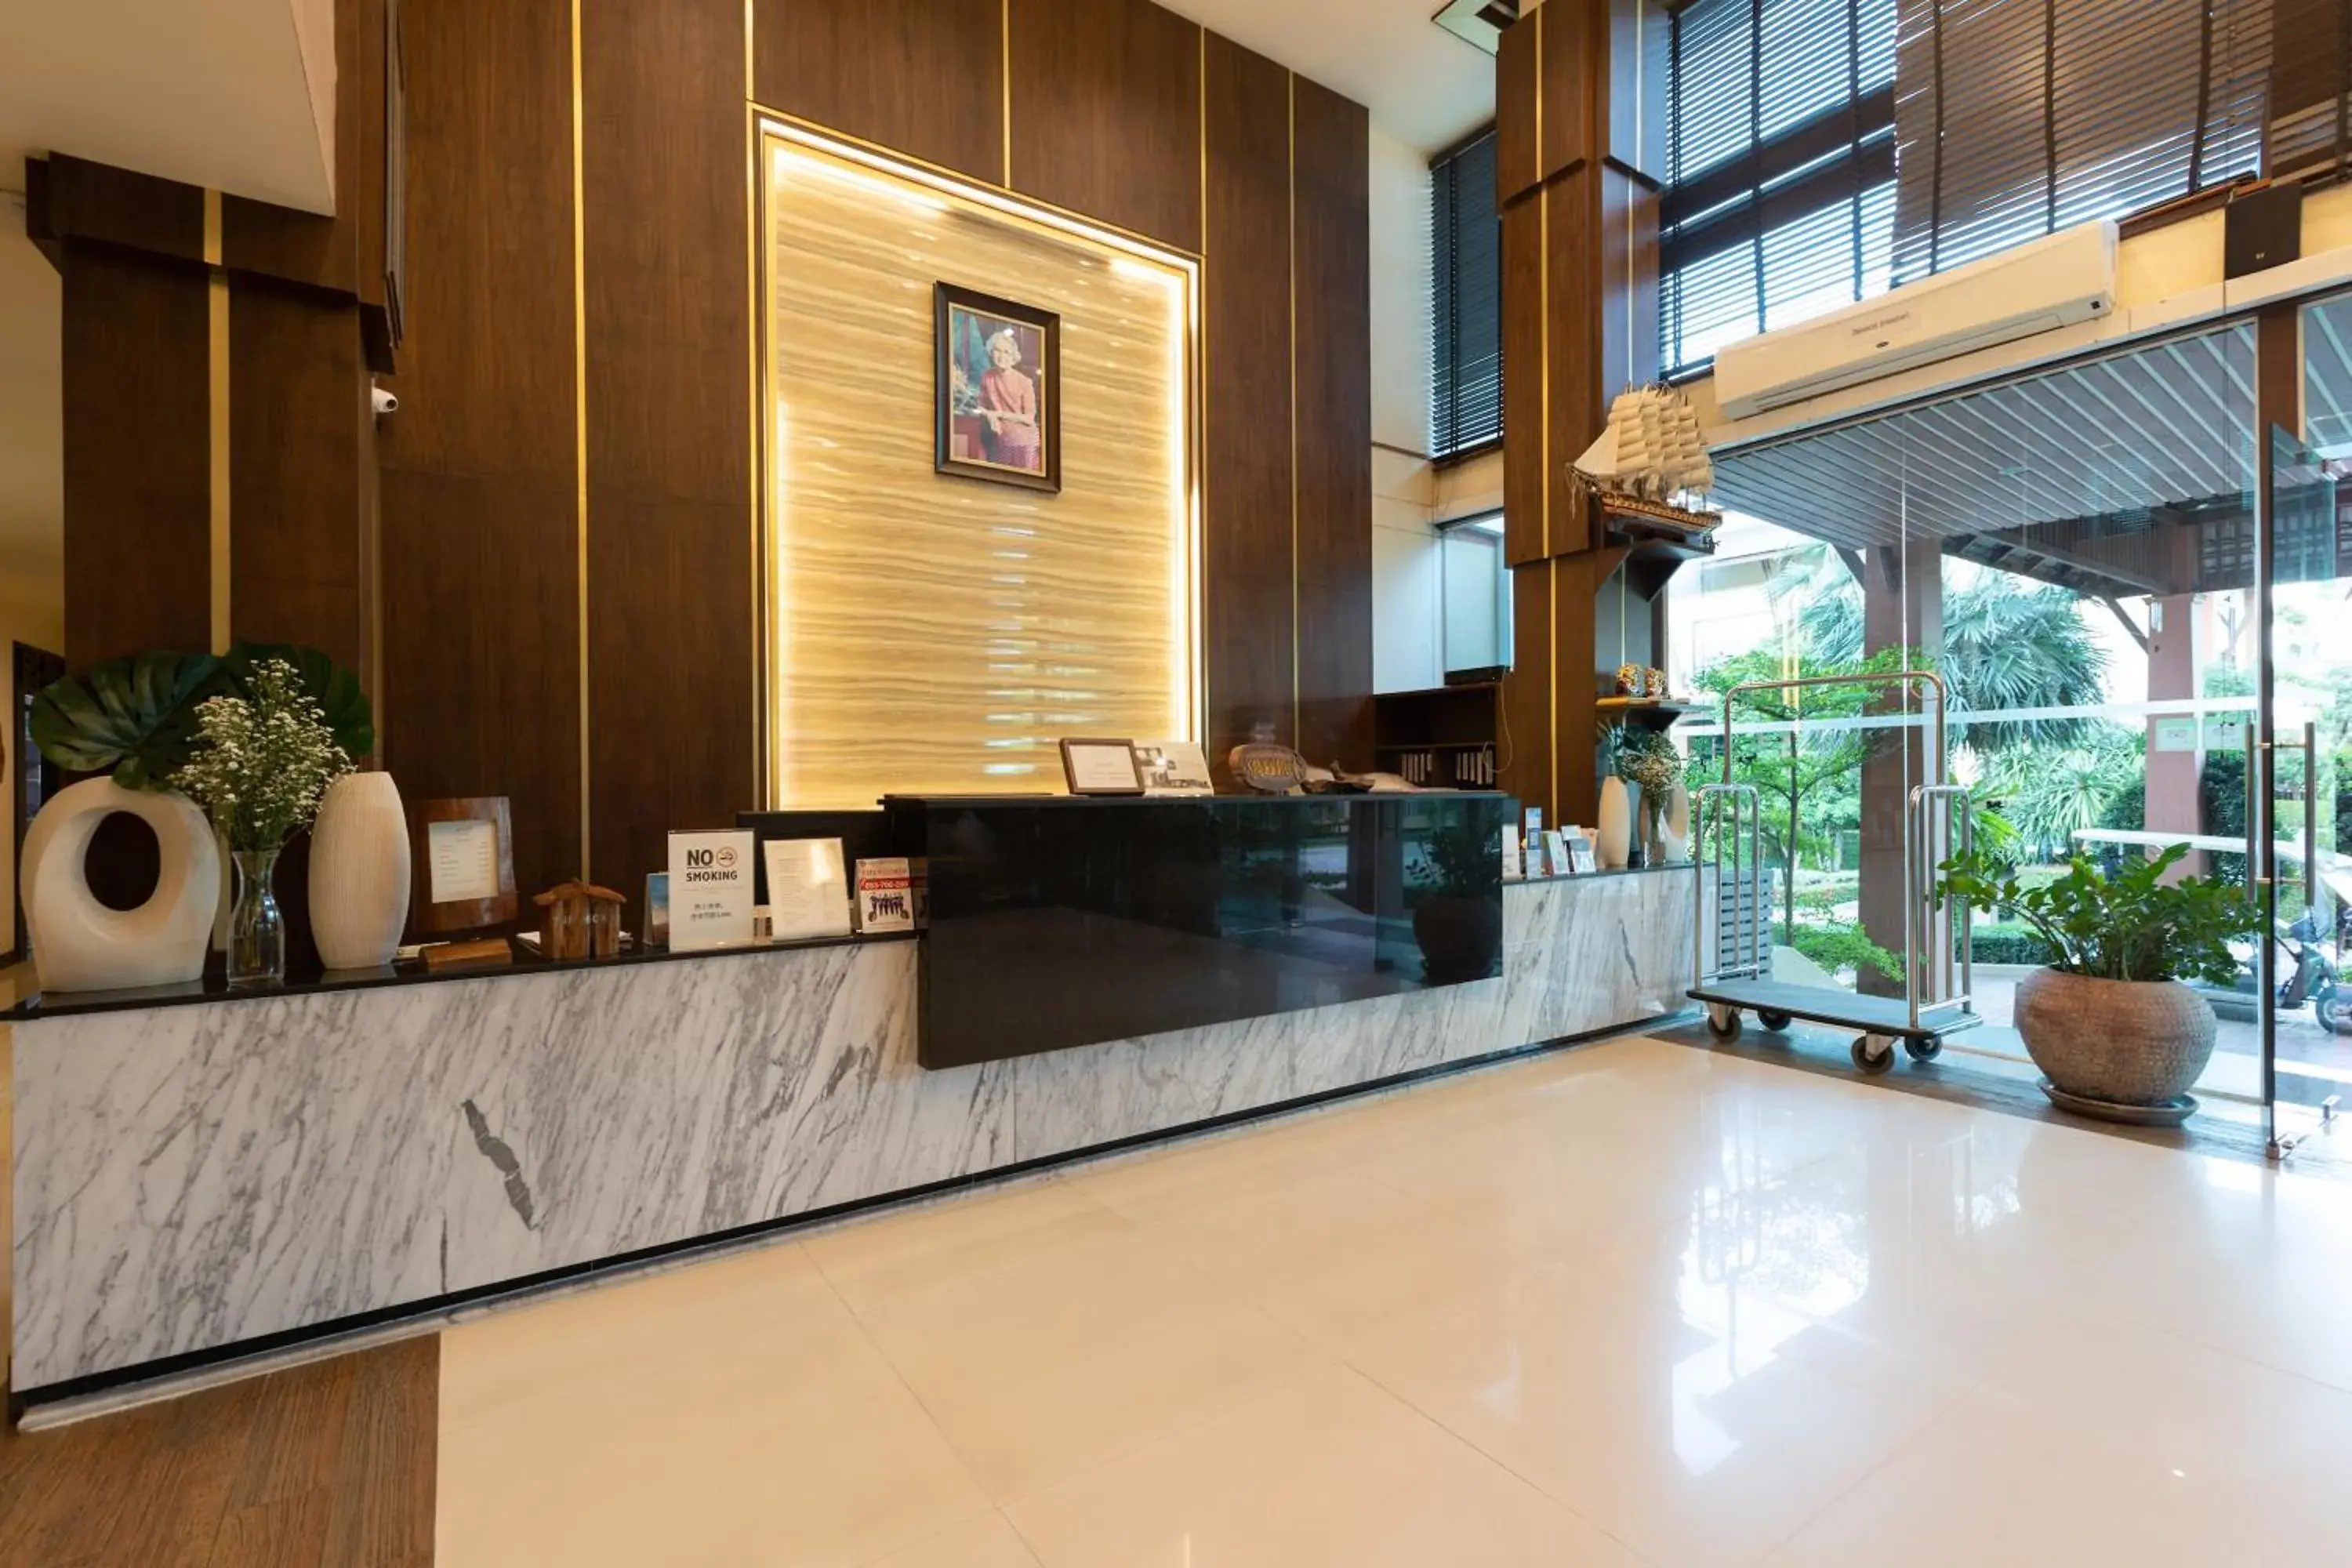 Lobby or reception, Lobby/Reception in Phufa Waree Chiangrai Resort - SHA Extra Plus